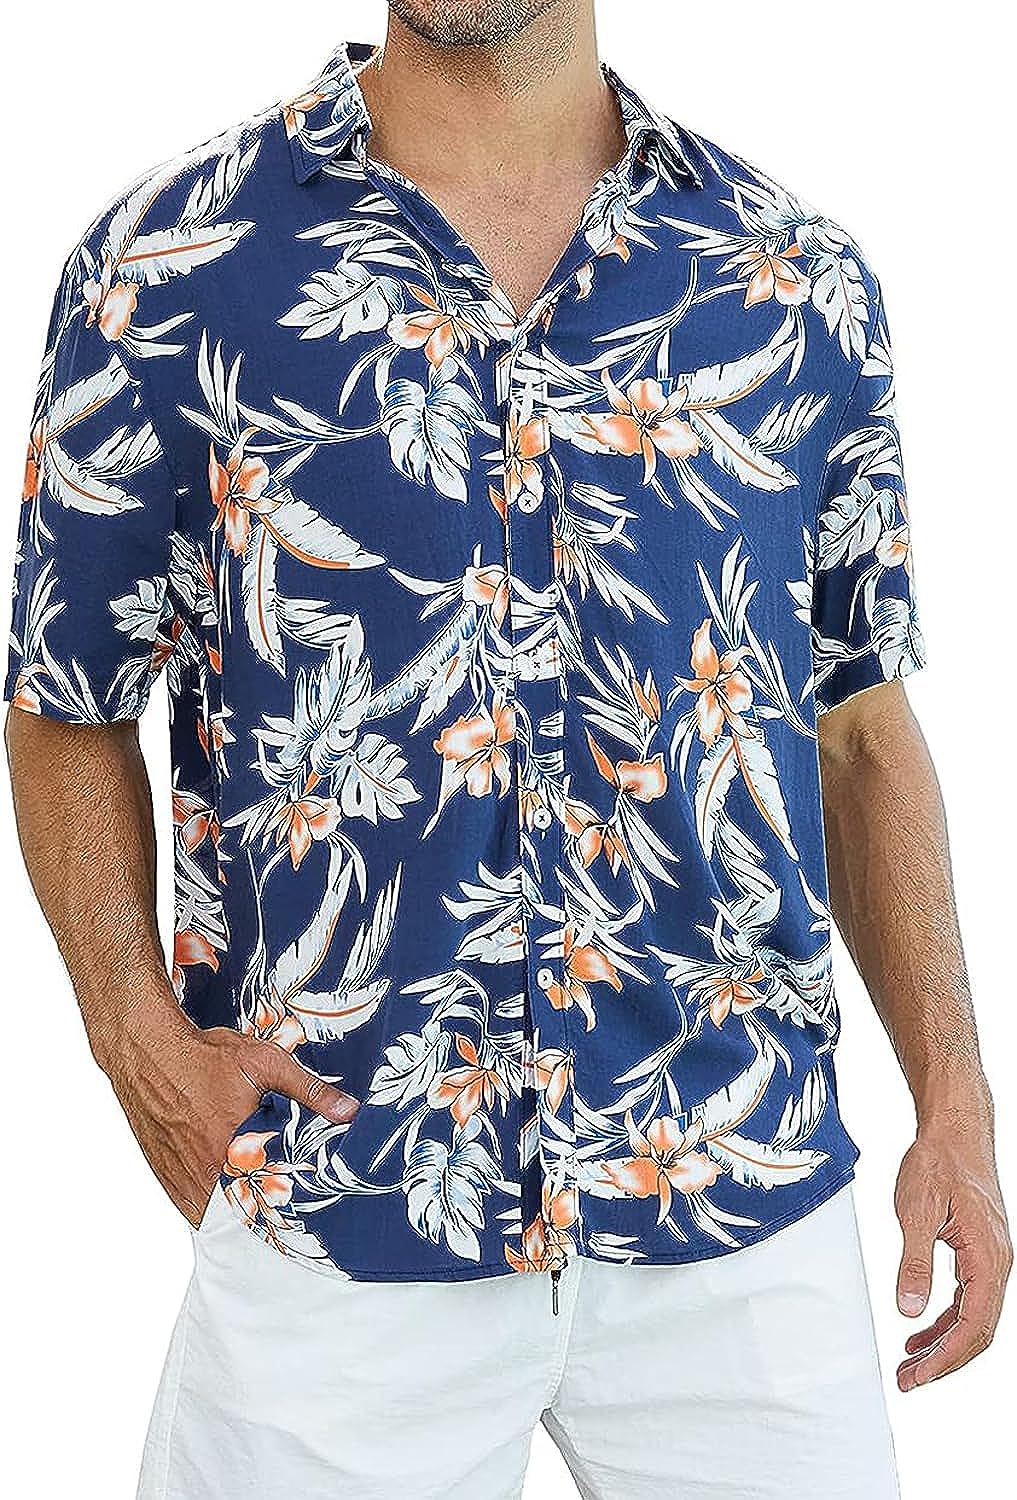 Men's Hawaiian Shirts - Short Sleeve, Tropical Button Down Shirts for Summer Beach, Unique Patterns, Sizes S-3xl Navy Floral / XXL